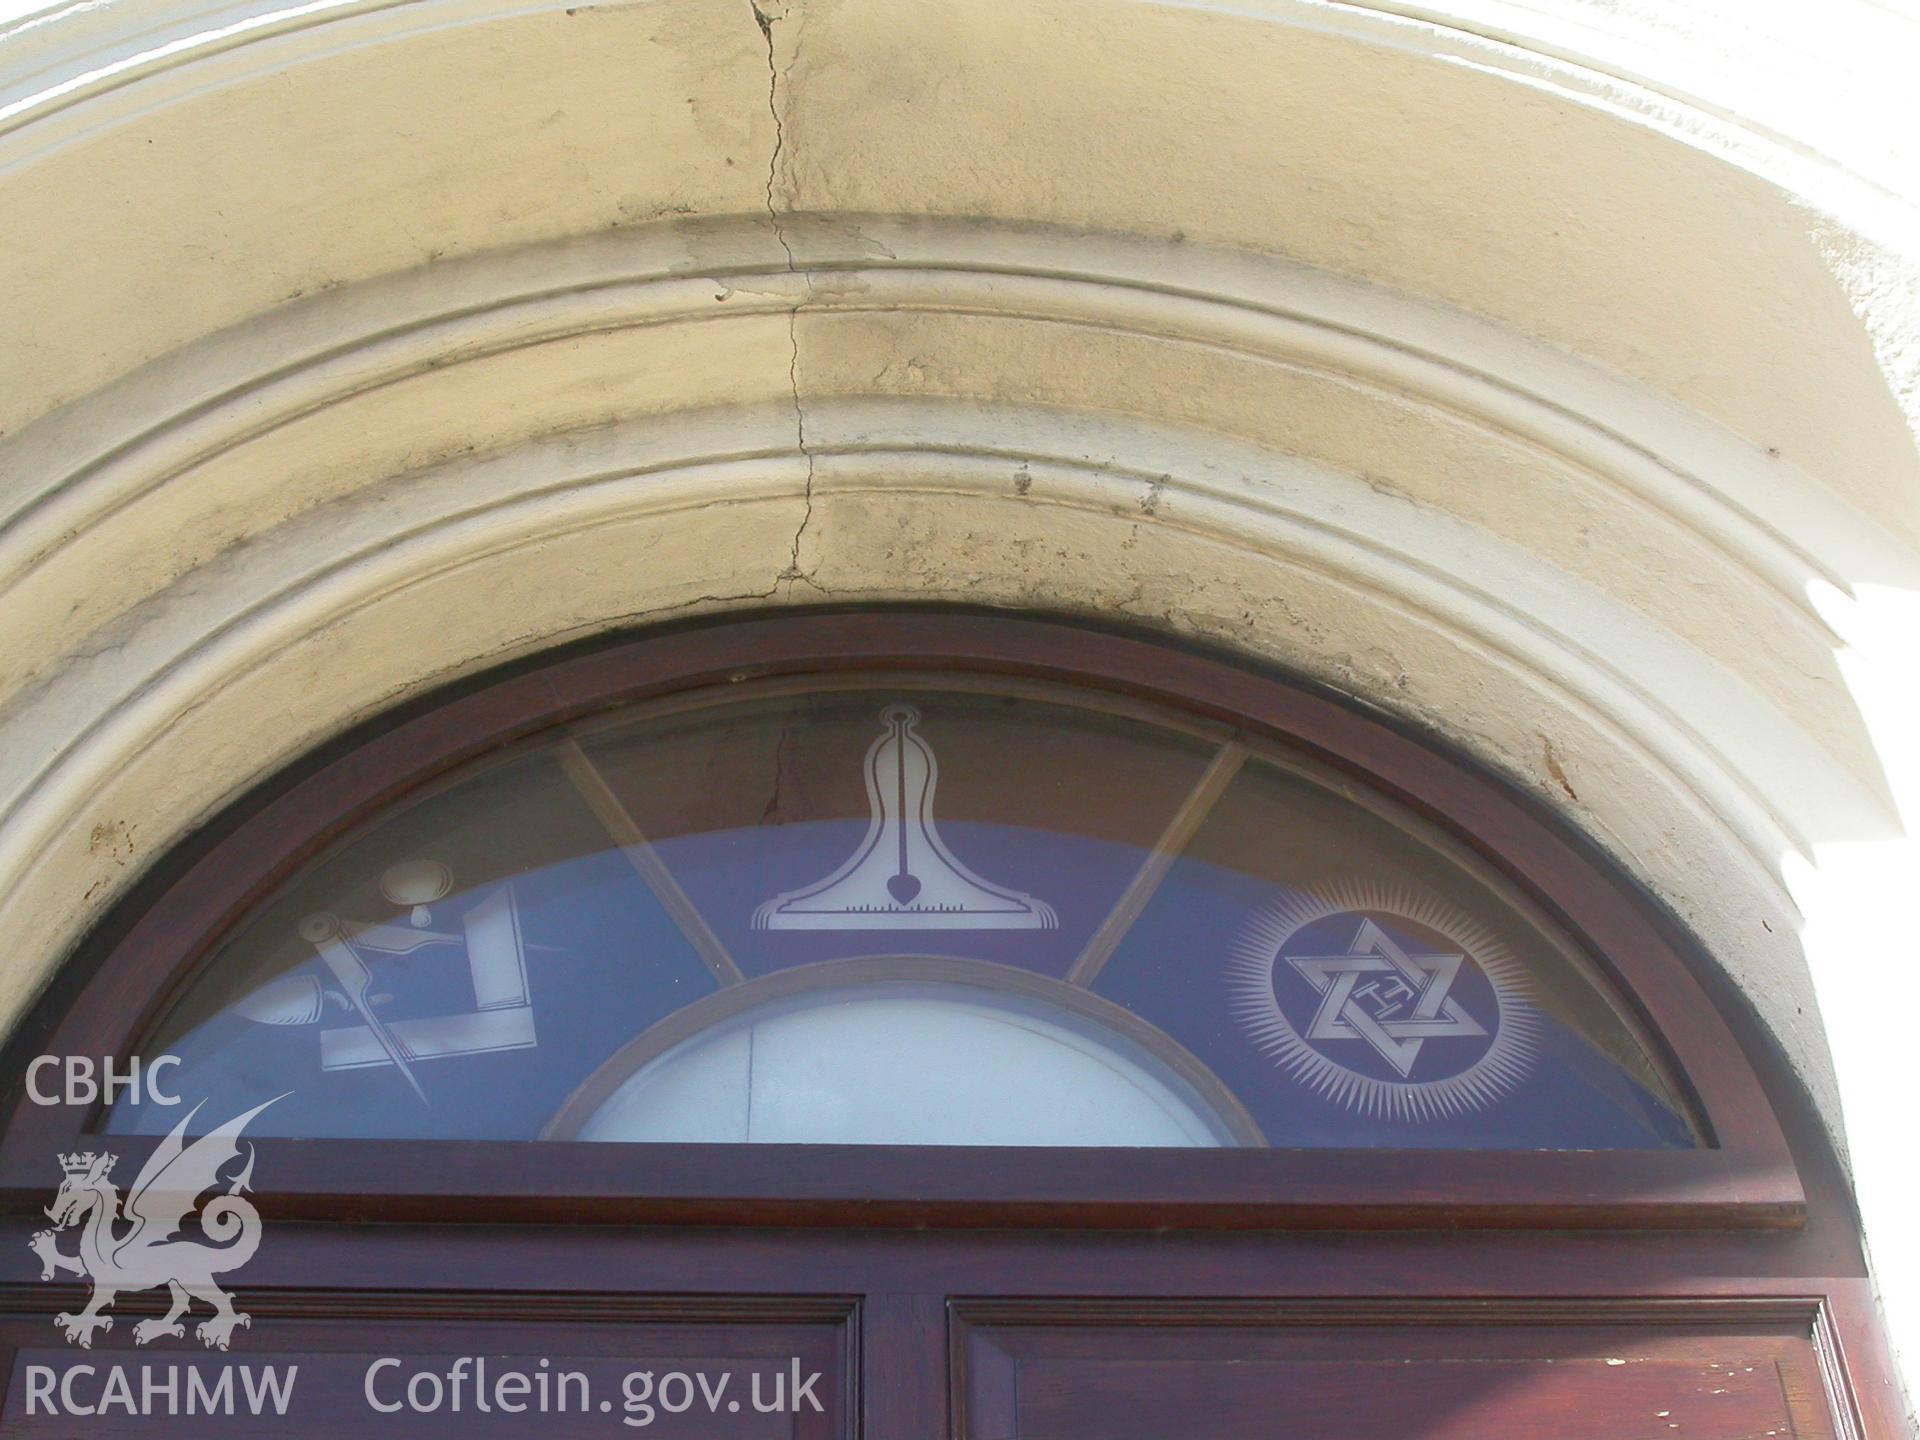 Masonic symbols over the main door.